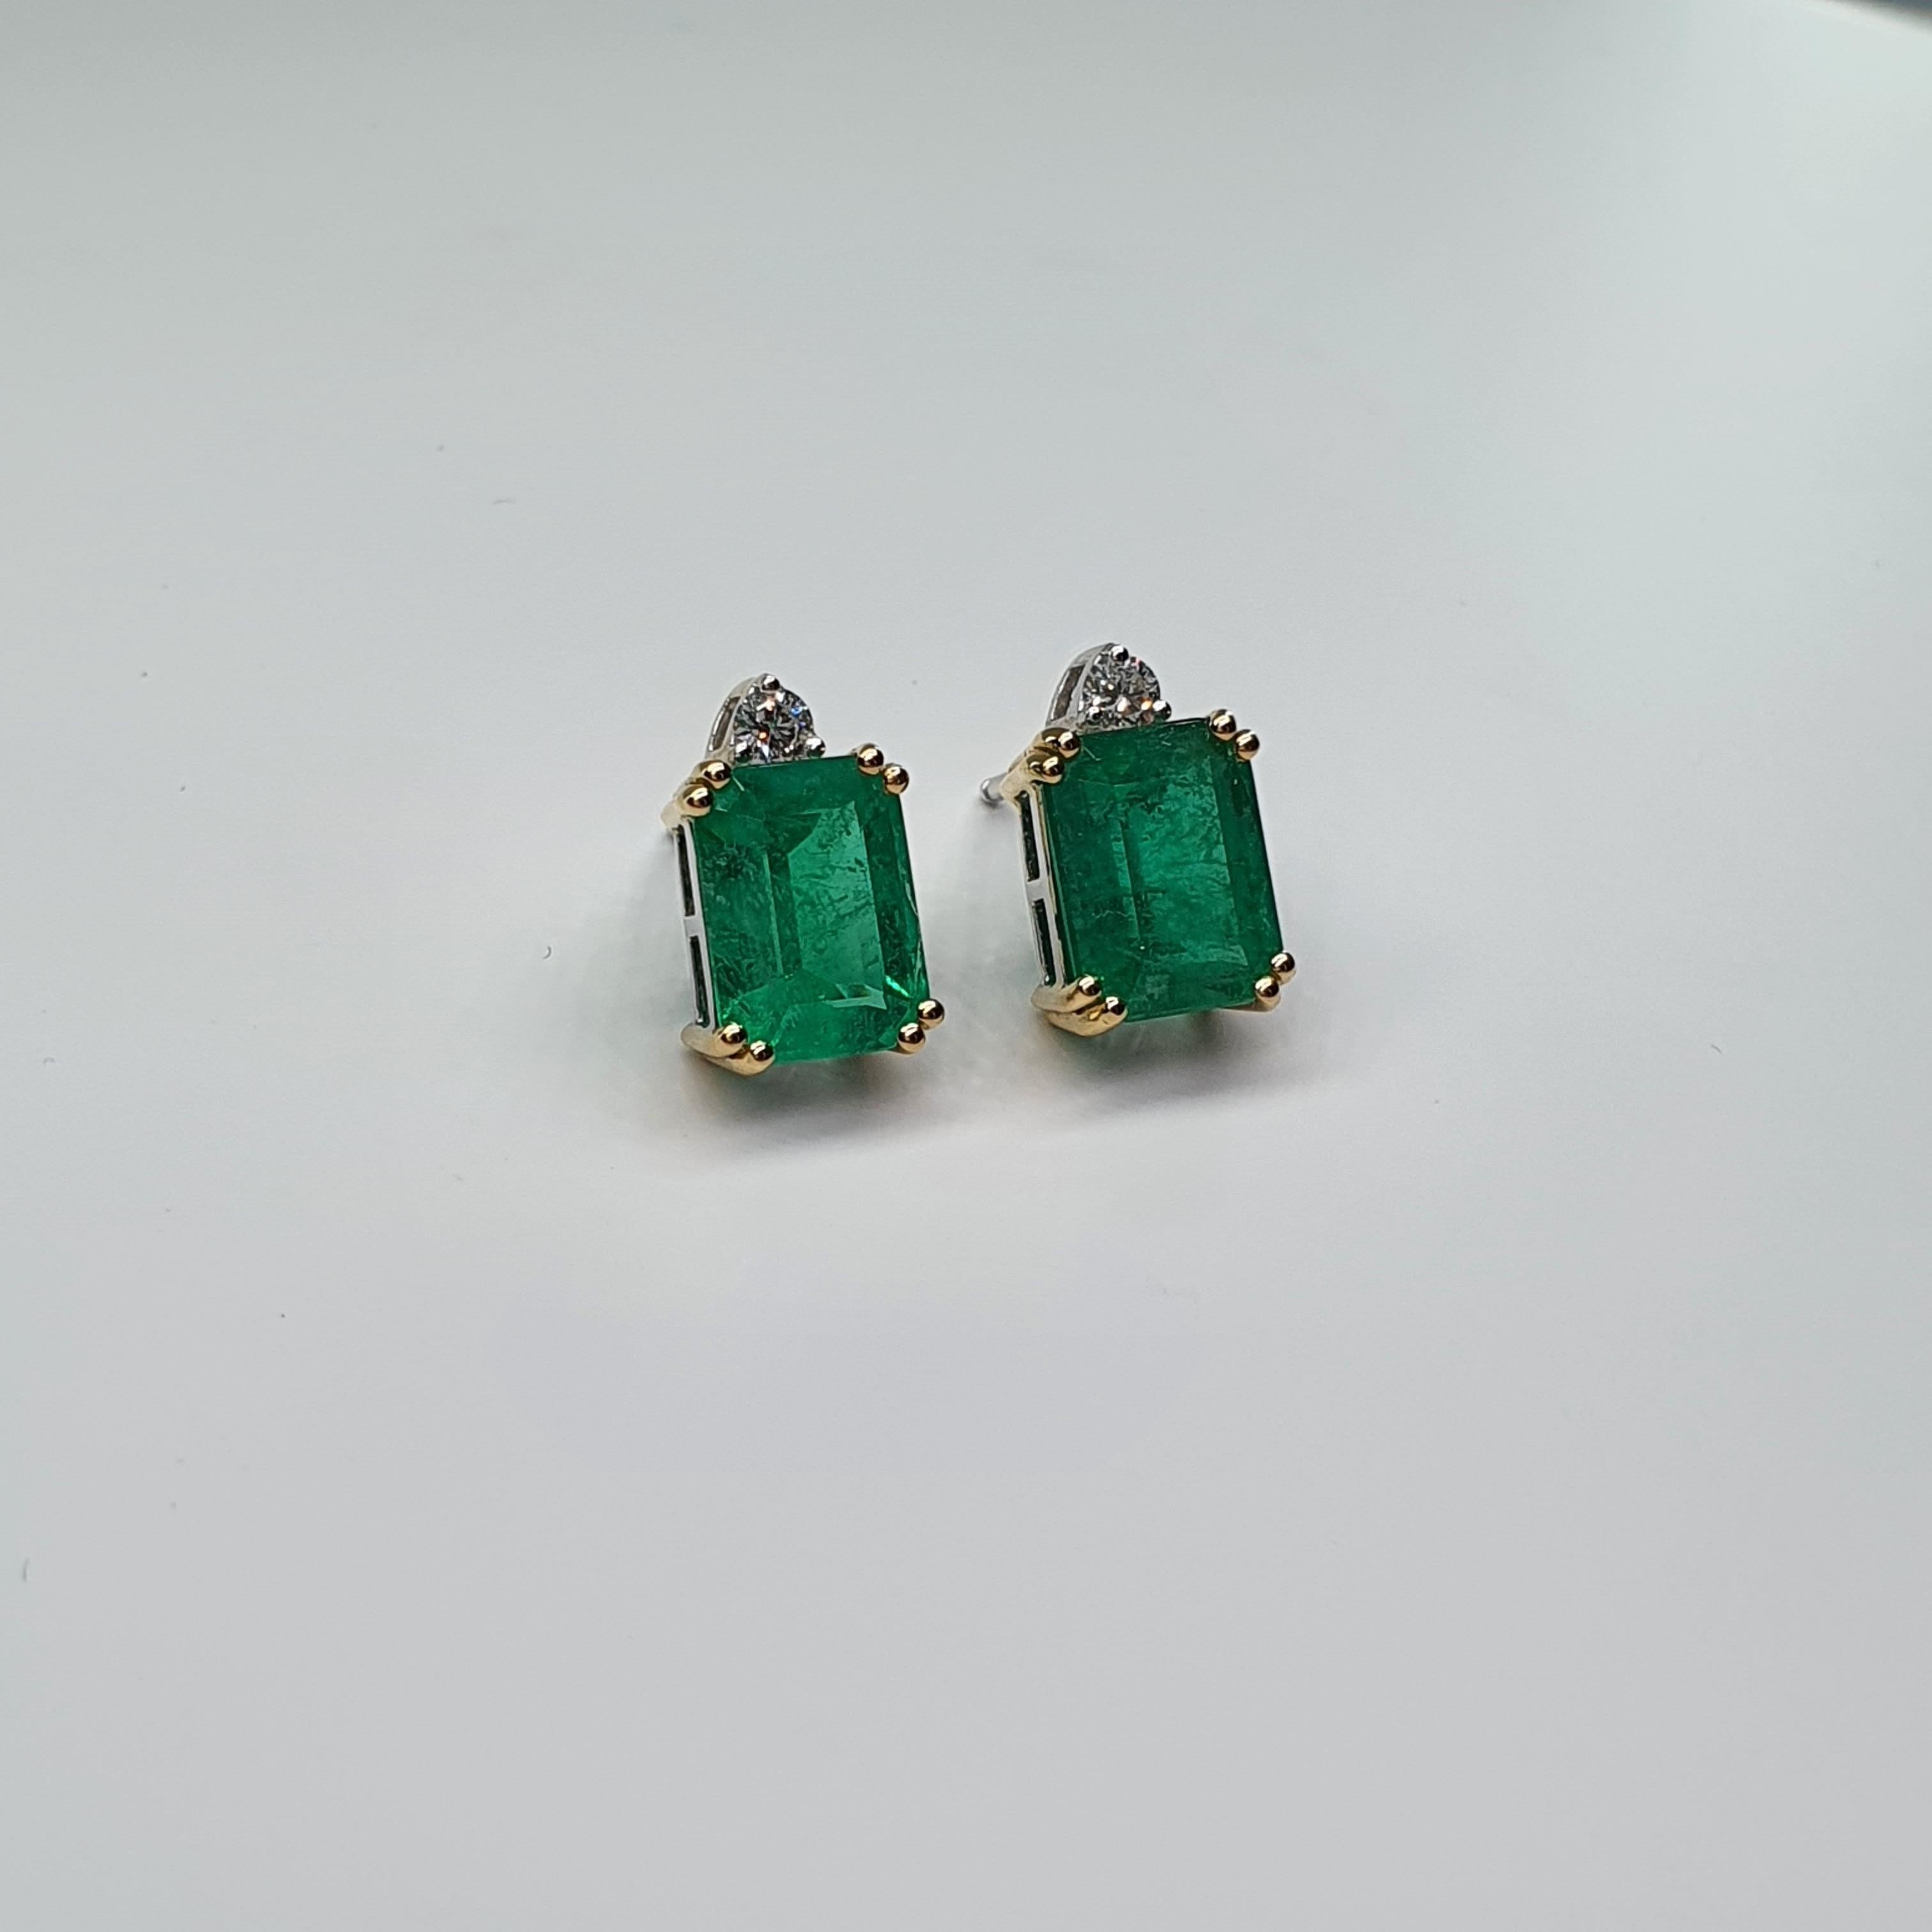 Emerald Cut 4.89 Carat Natural Emerald Diamond Stud Earrings 18K White Gold